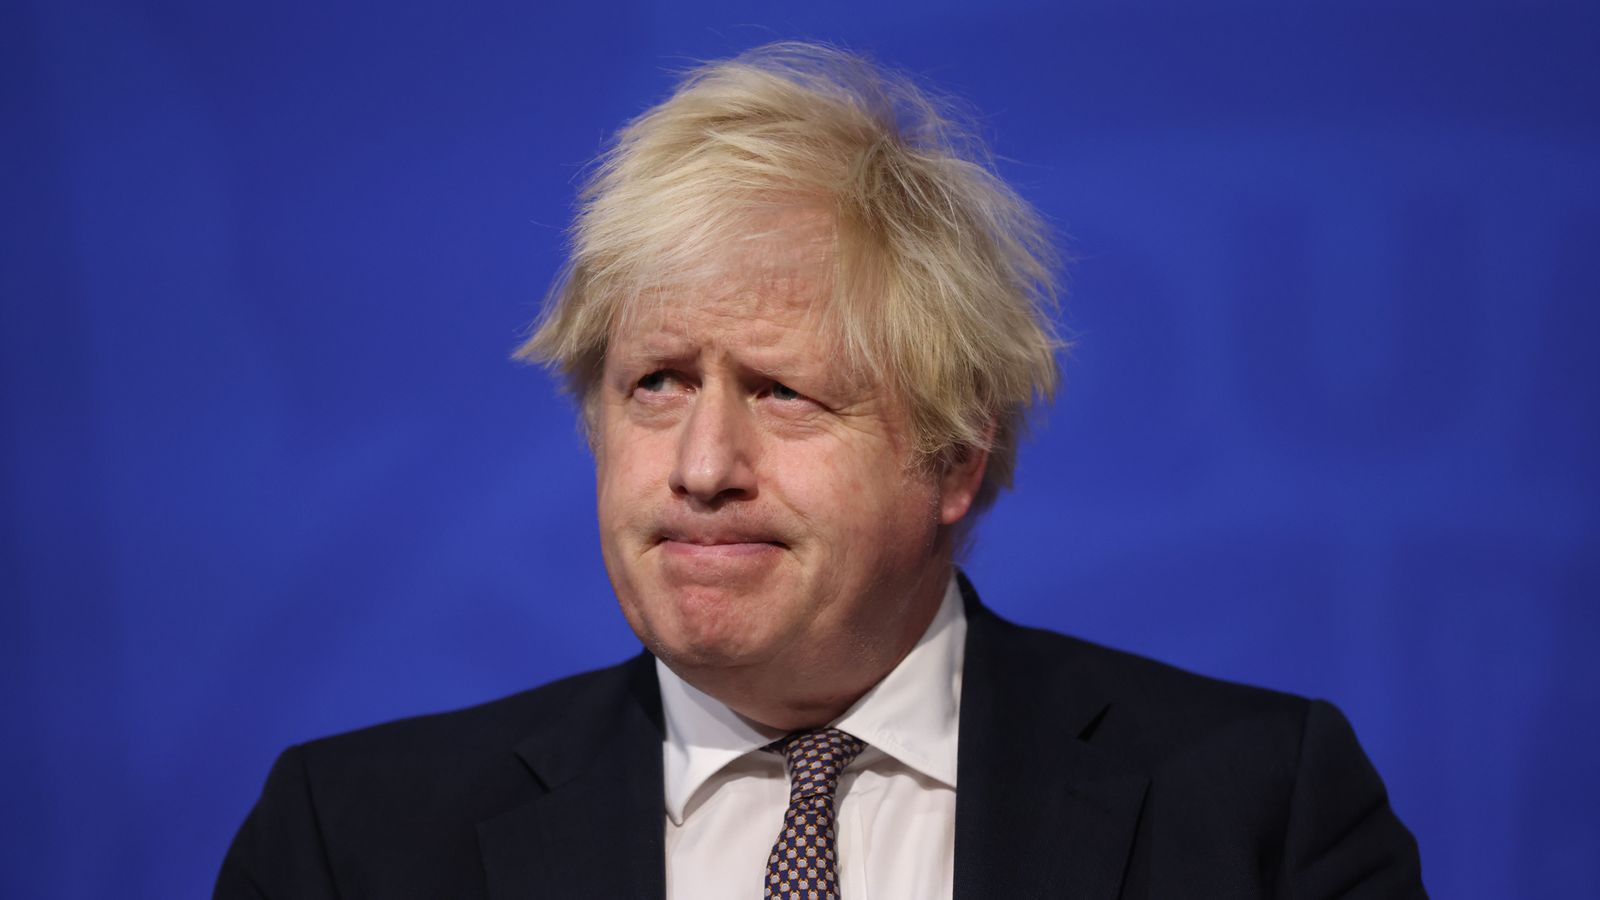 Apakah beberapa minggu terakhir yang goyah melihat titik balik bagi Boris Johnson sebagai PM?  |  Berita Politik